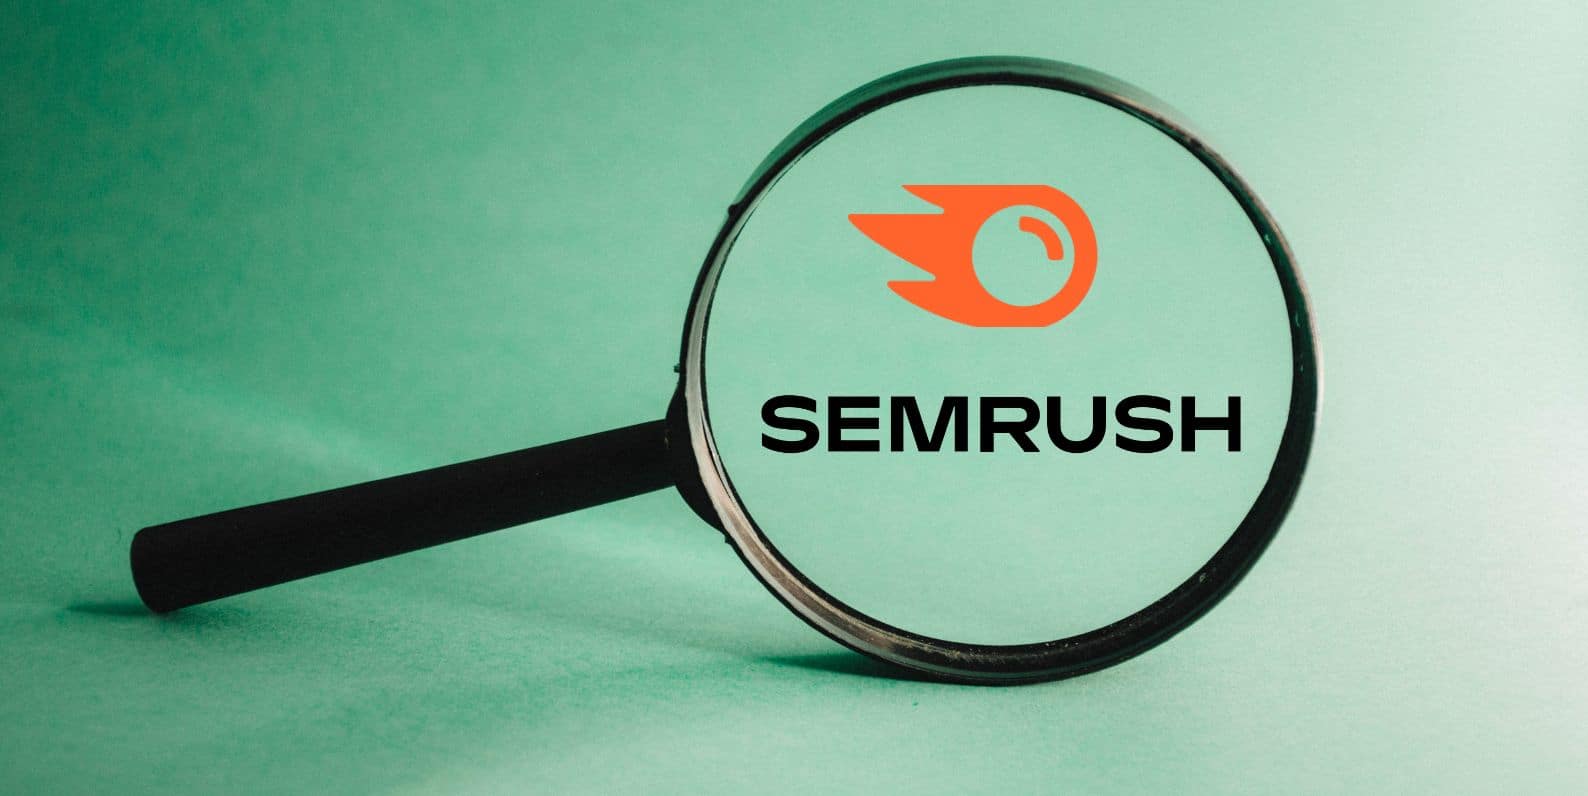 SEMrush Free Trial + Tutorial + Unbiased Review